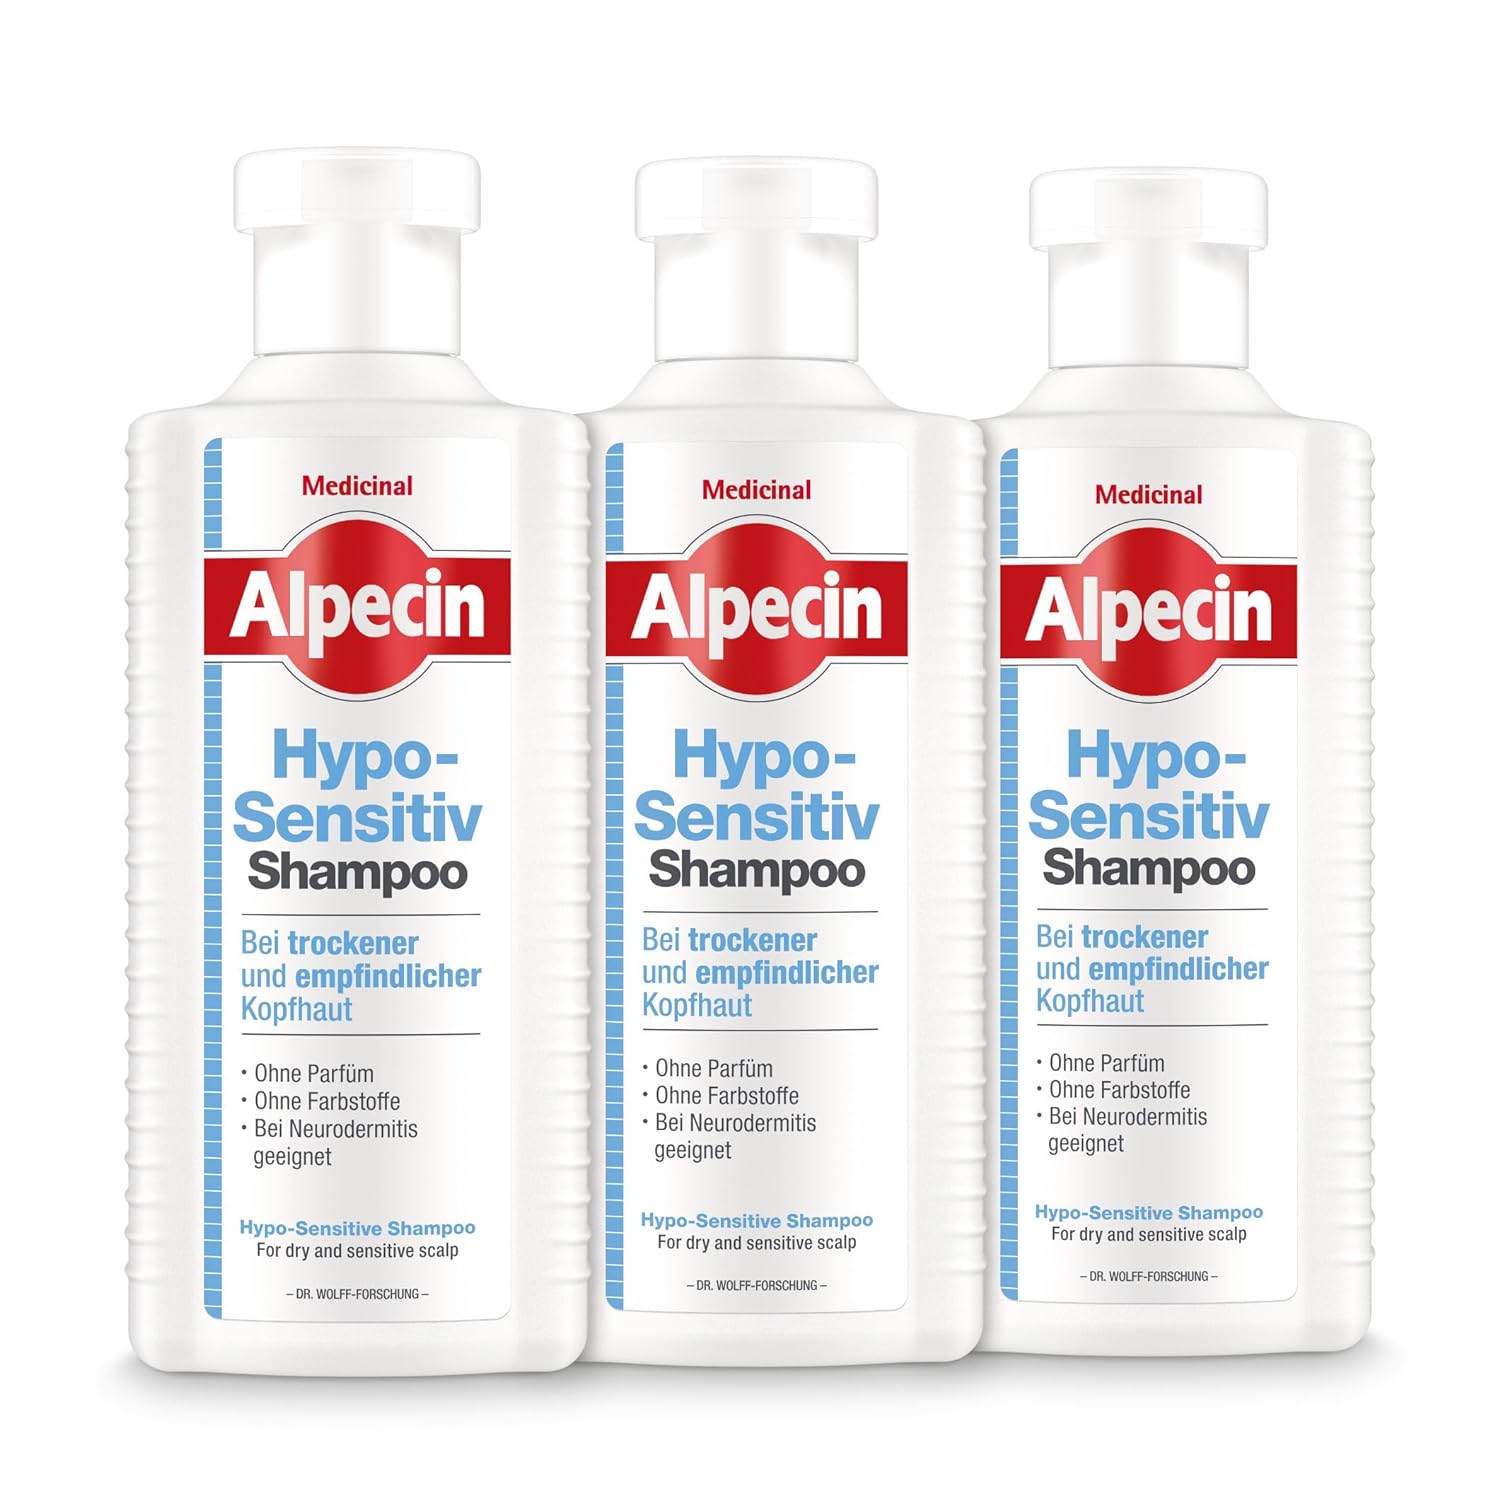 Alpecin Hypo -Sensitive Shampoo - 3 x 250 ml - Hair Shampoo for Dry and Sensitive Scalp | No dyes and no perfume